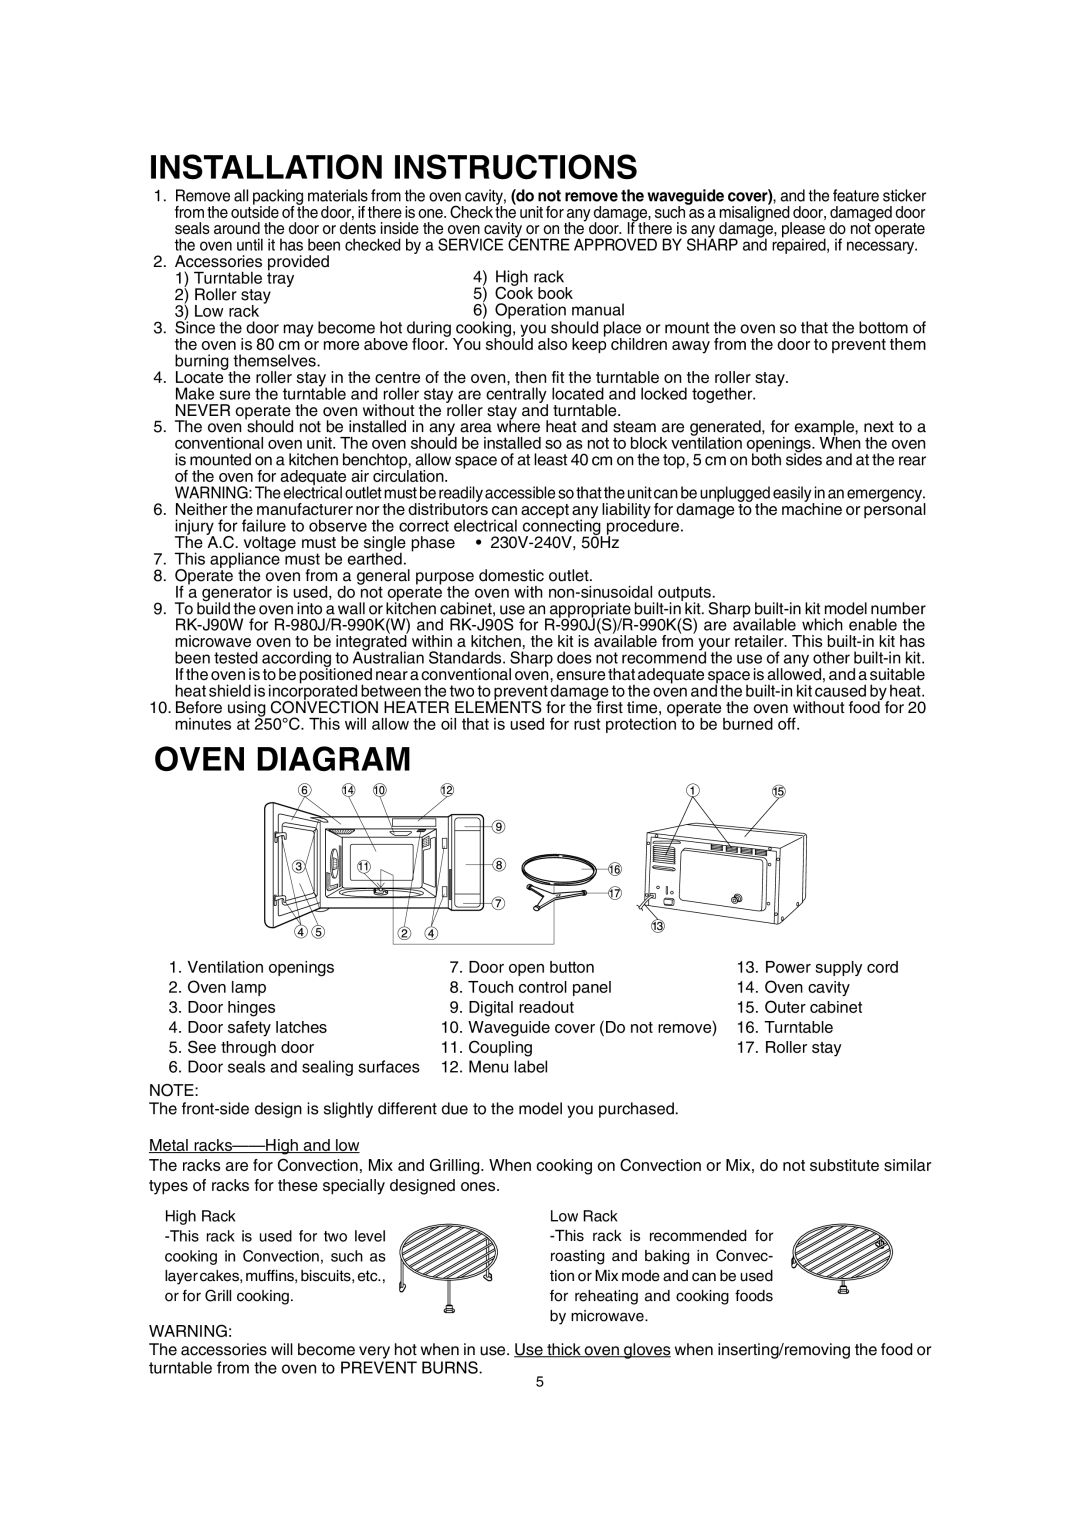 Sharp R-990J(S), R-990K(S)/(W), R-980J operation manual Installation Instructions, Oven Diagram 